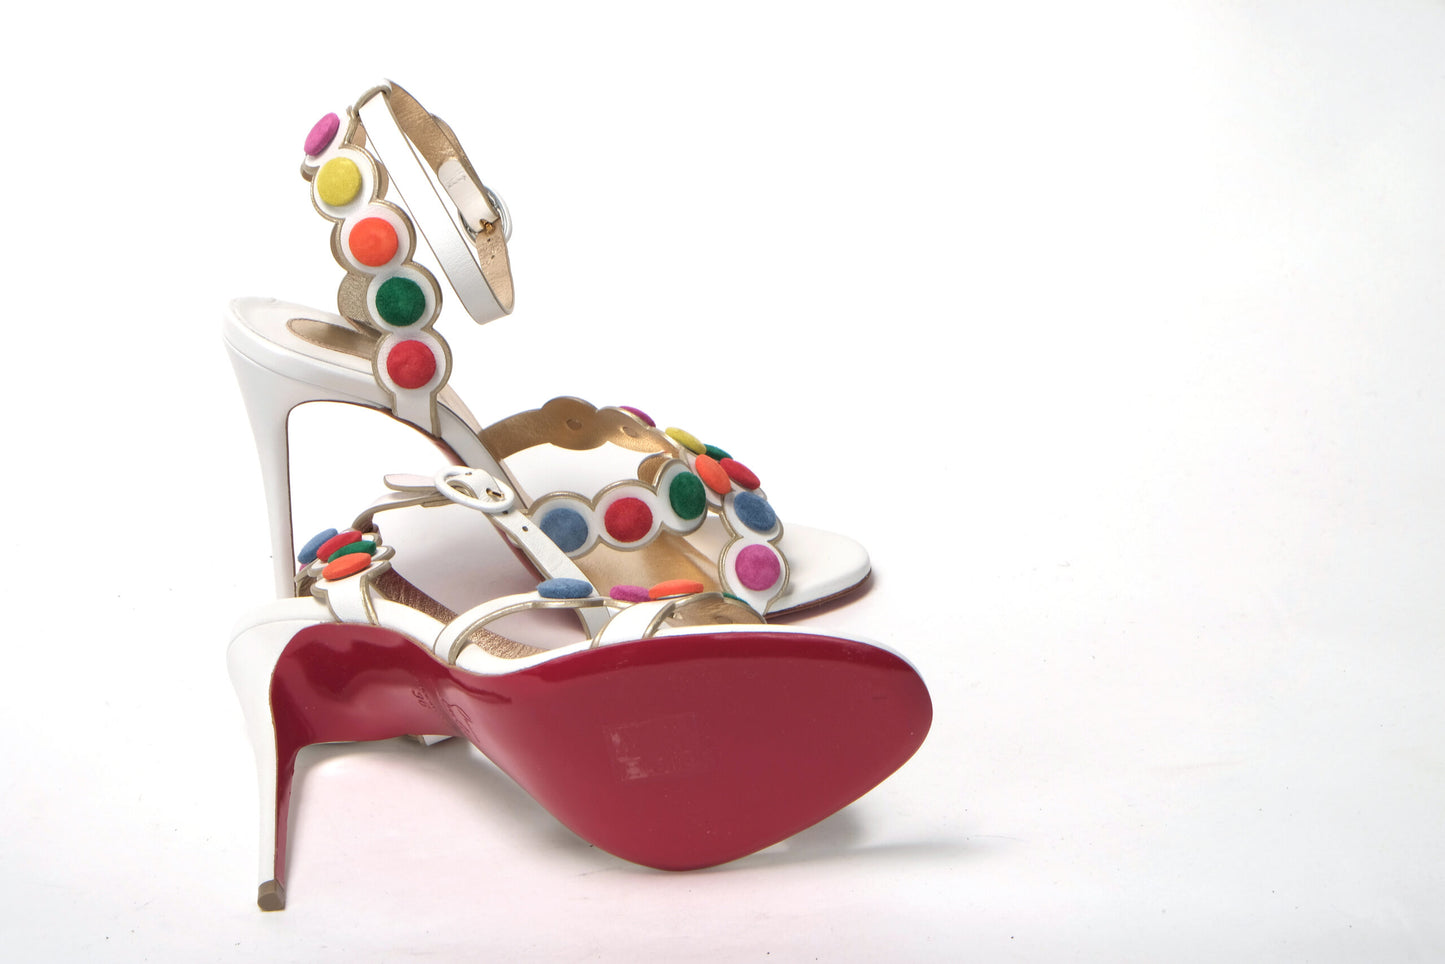 Christian Louboutin White Multicolor Spot Design High Heels Shoes Sandal